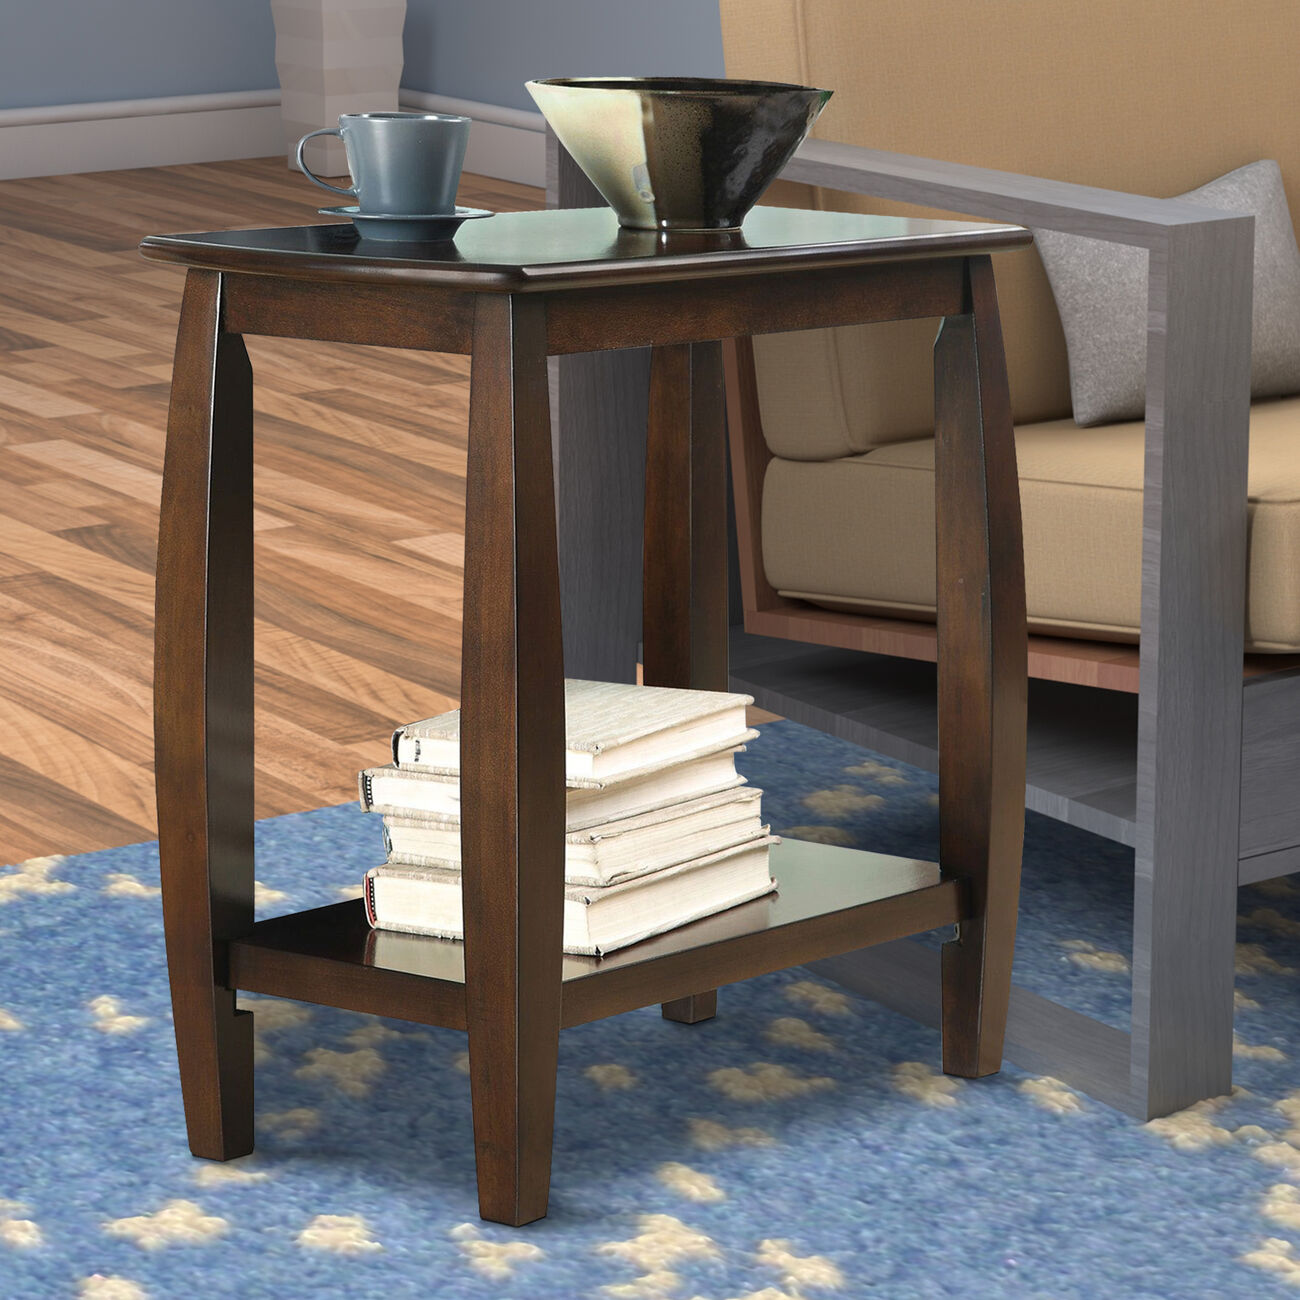 Elegant Wooden Chair Side Table, Brown